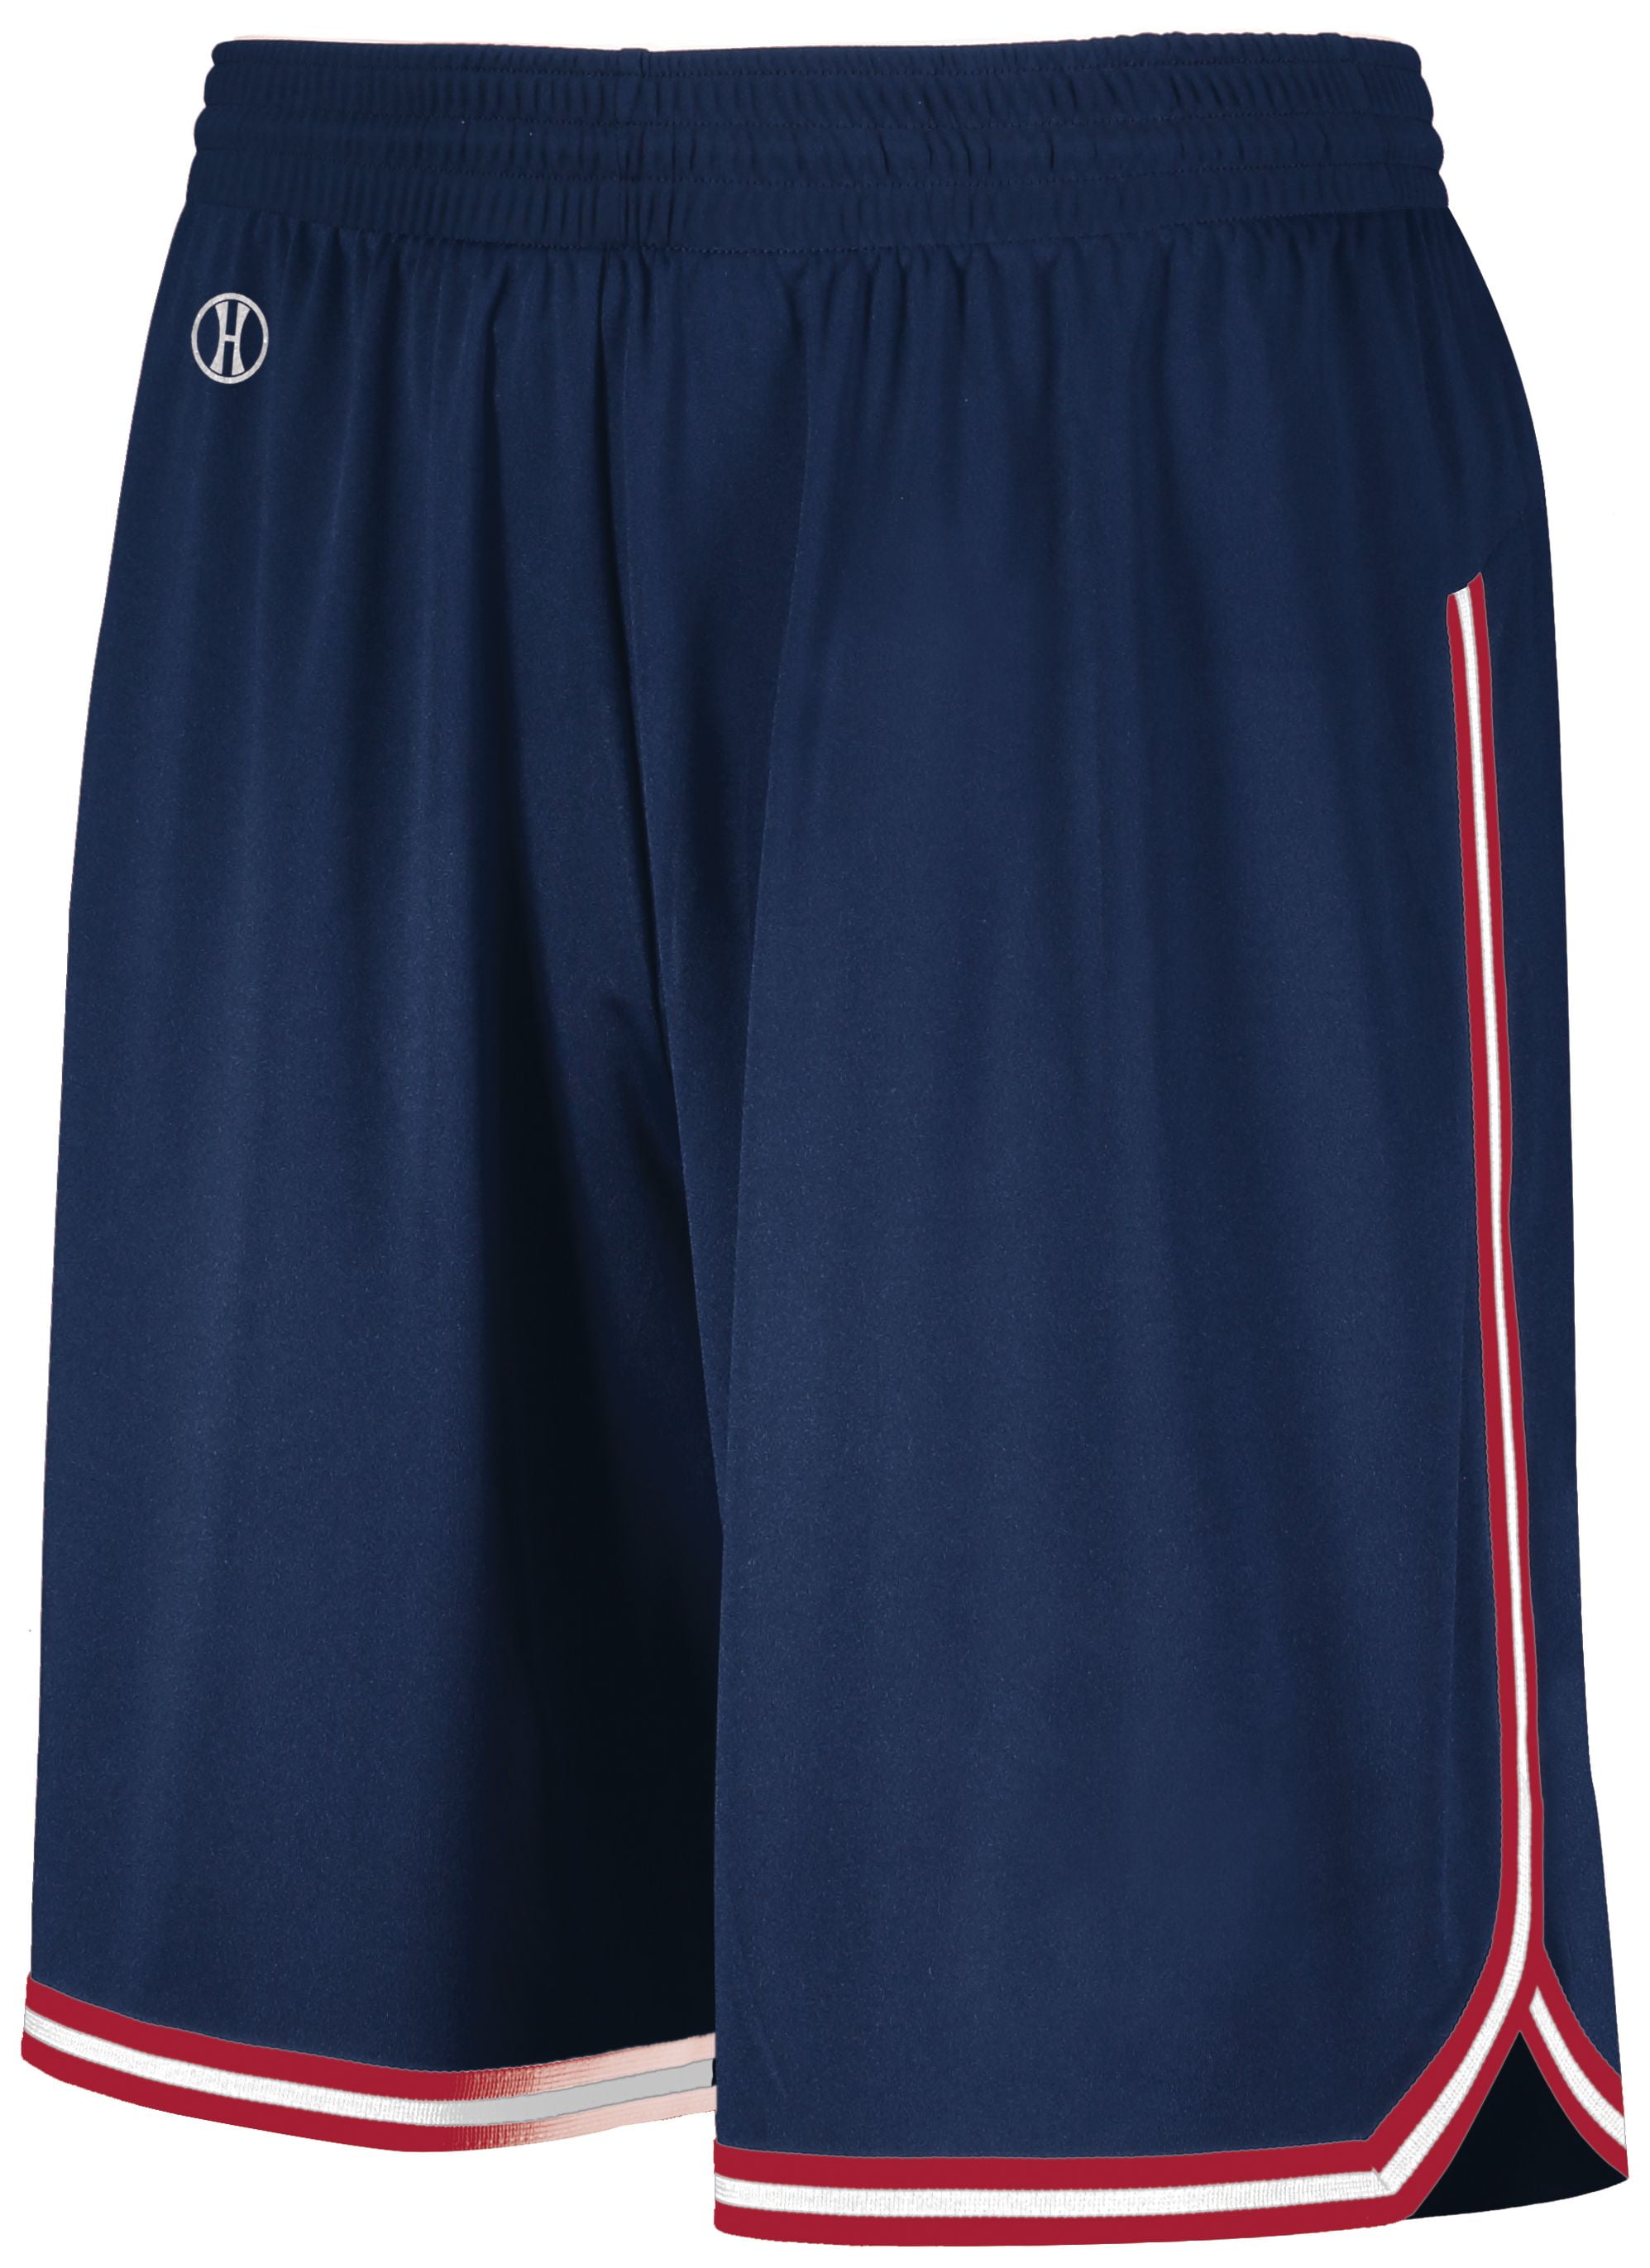 W1NNING - Light Blue Basketball Shorts w. White W1 Logo